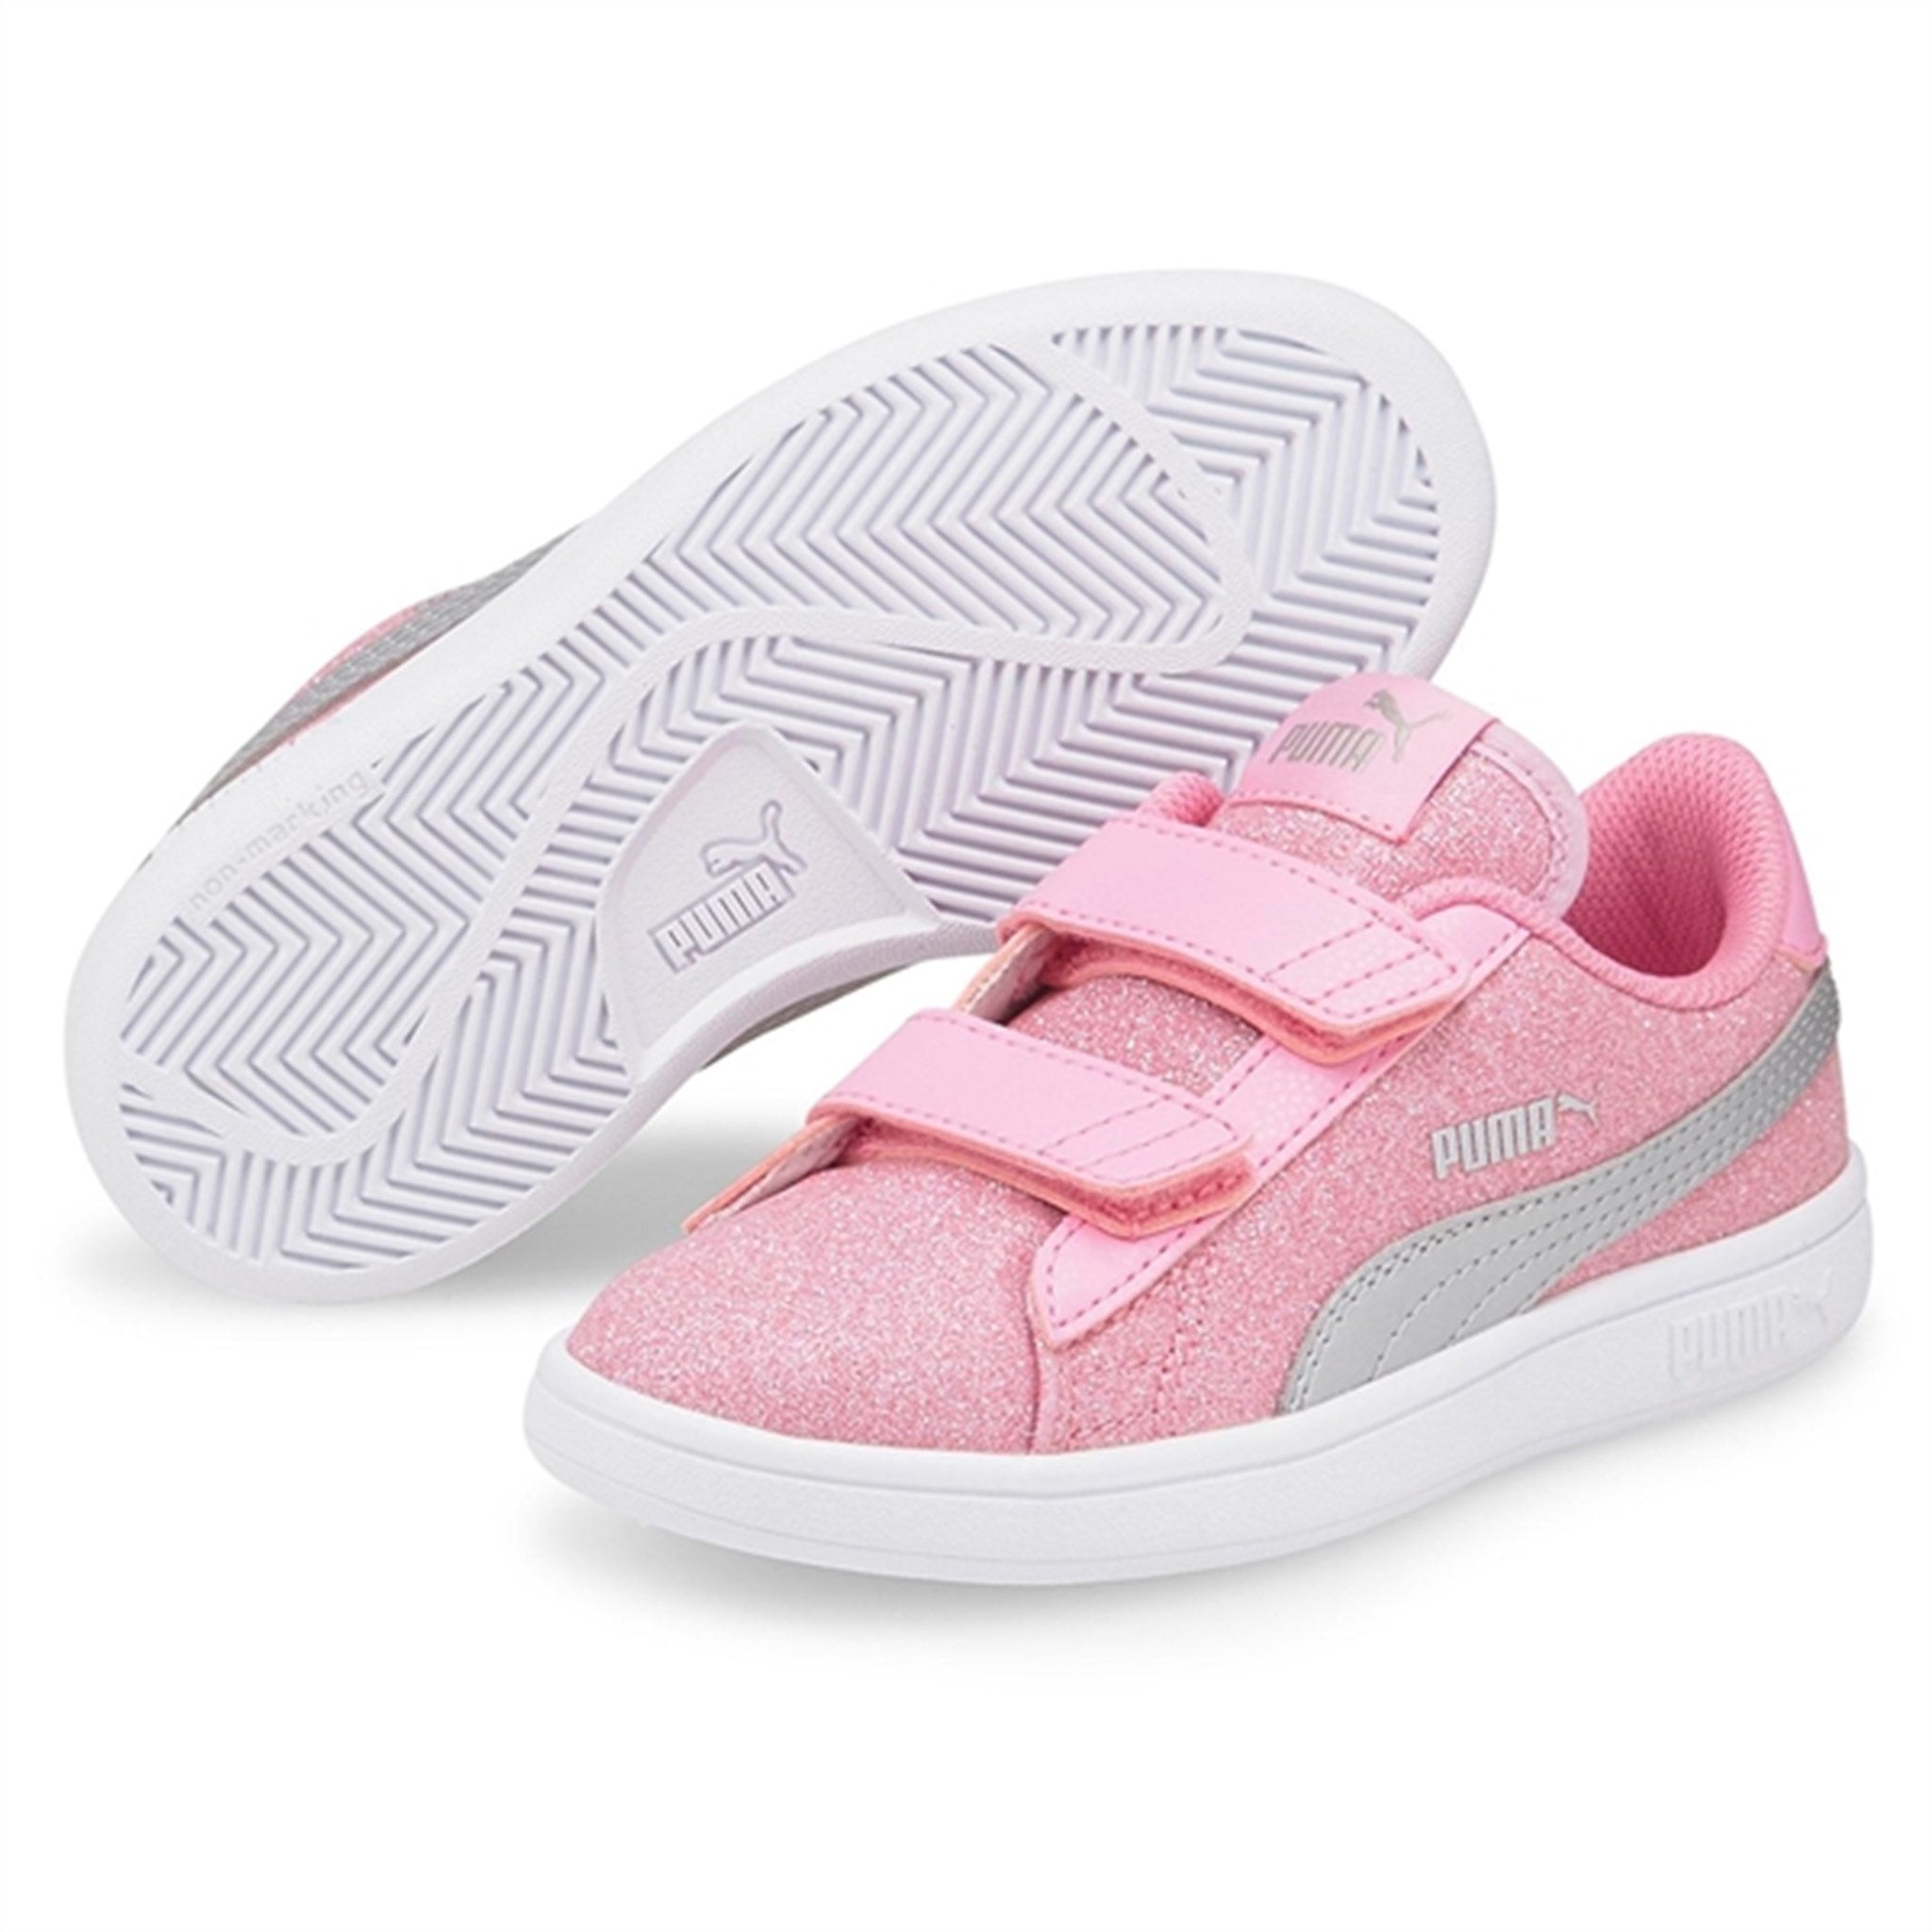 Puma Smash v2 Glitz Glam V PS Sneakers Prism Pink-Silver